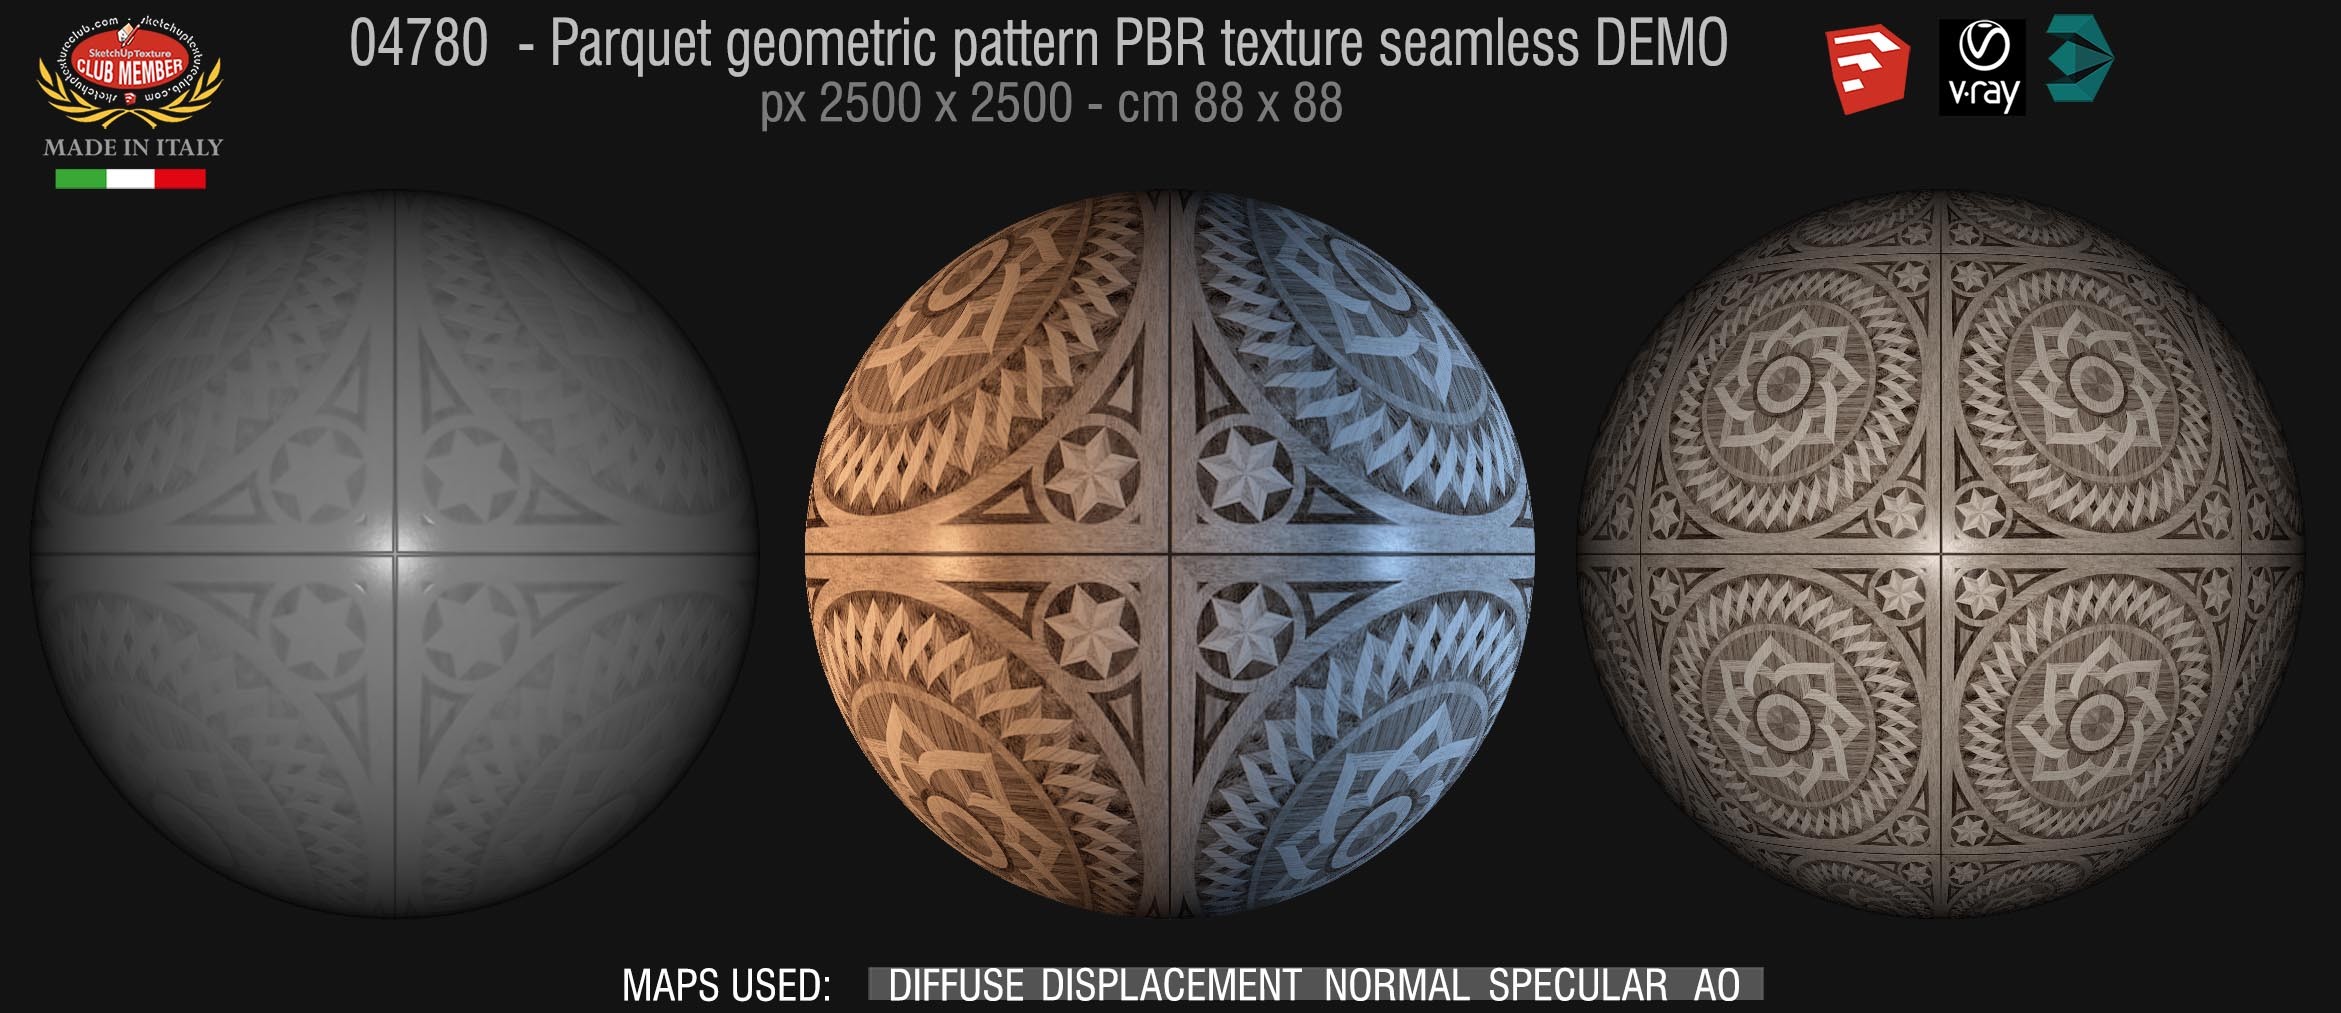 04780 Parquet geometric pattern PBR texture seamless DEMO